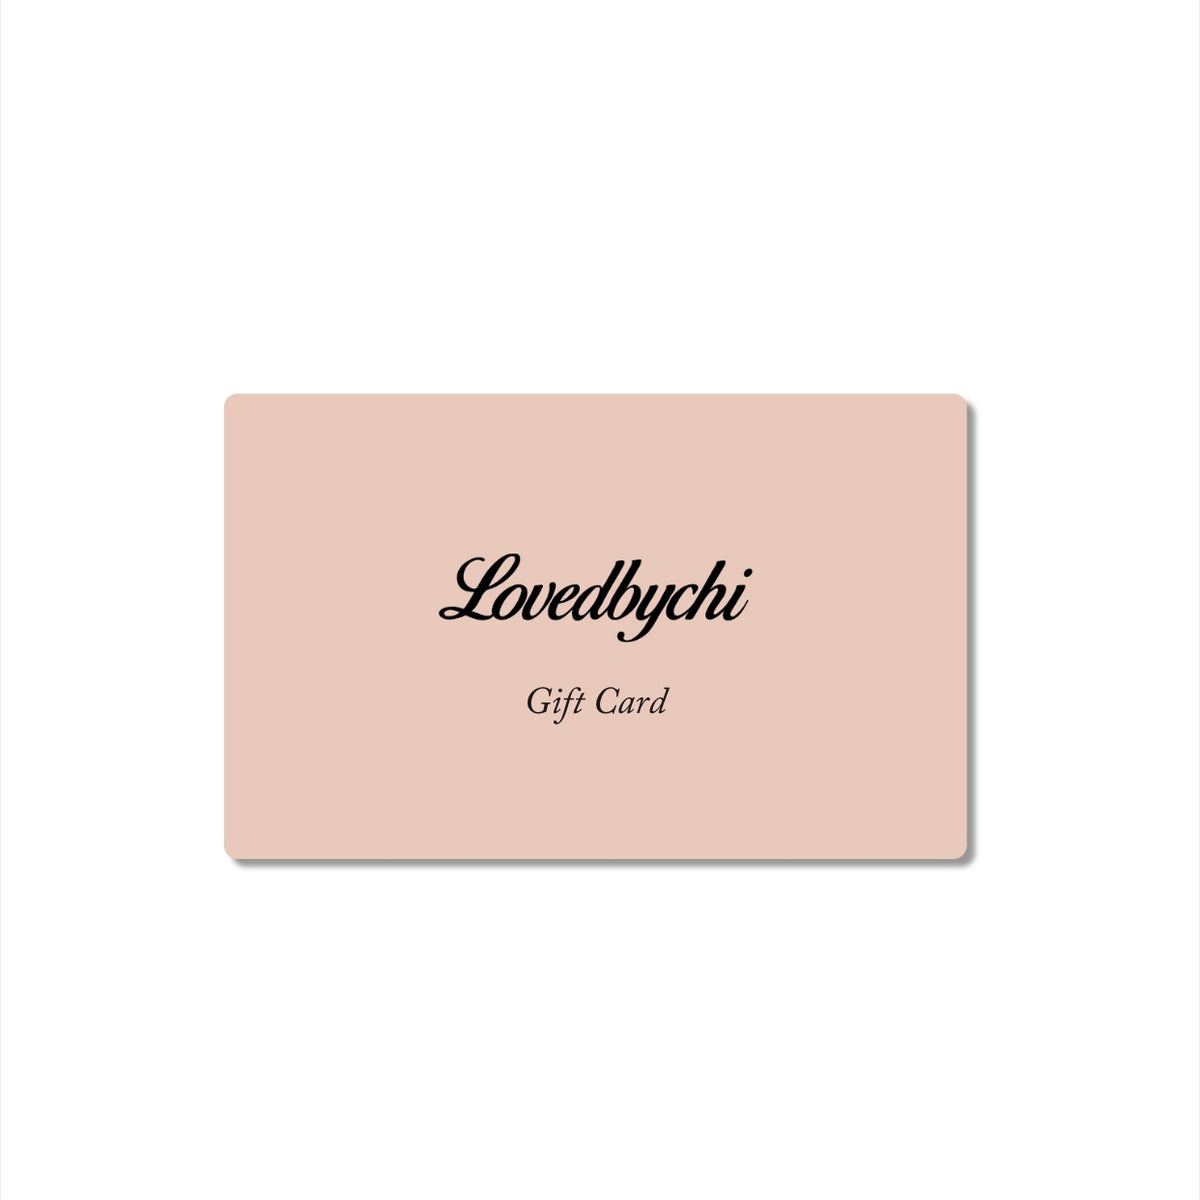 Lovedbychi Gift Card